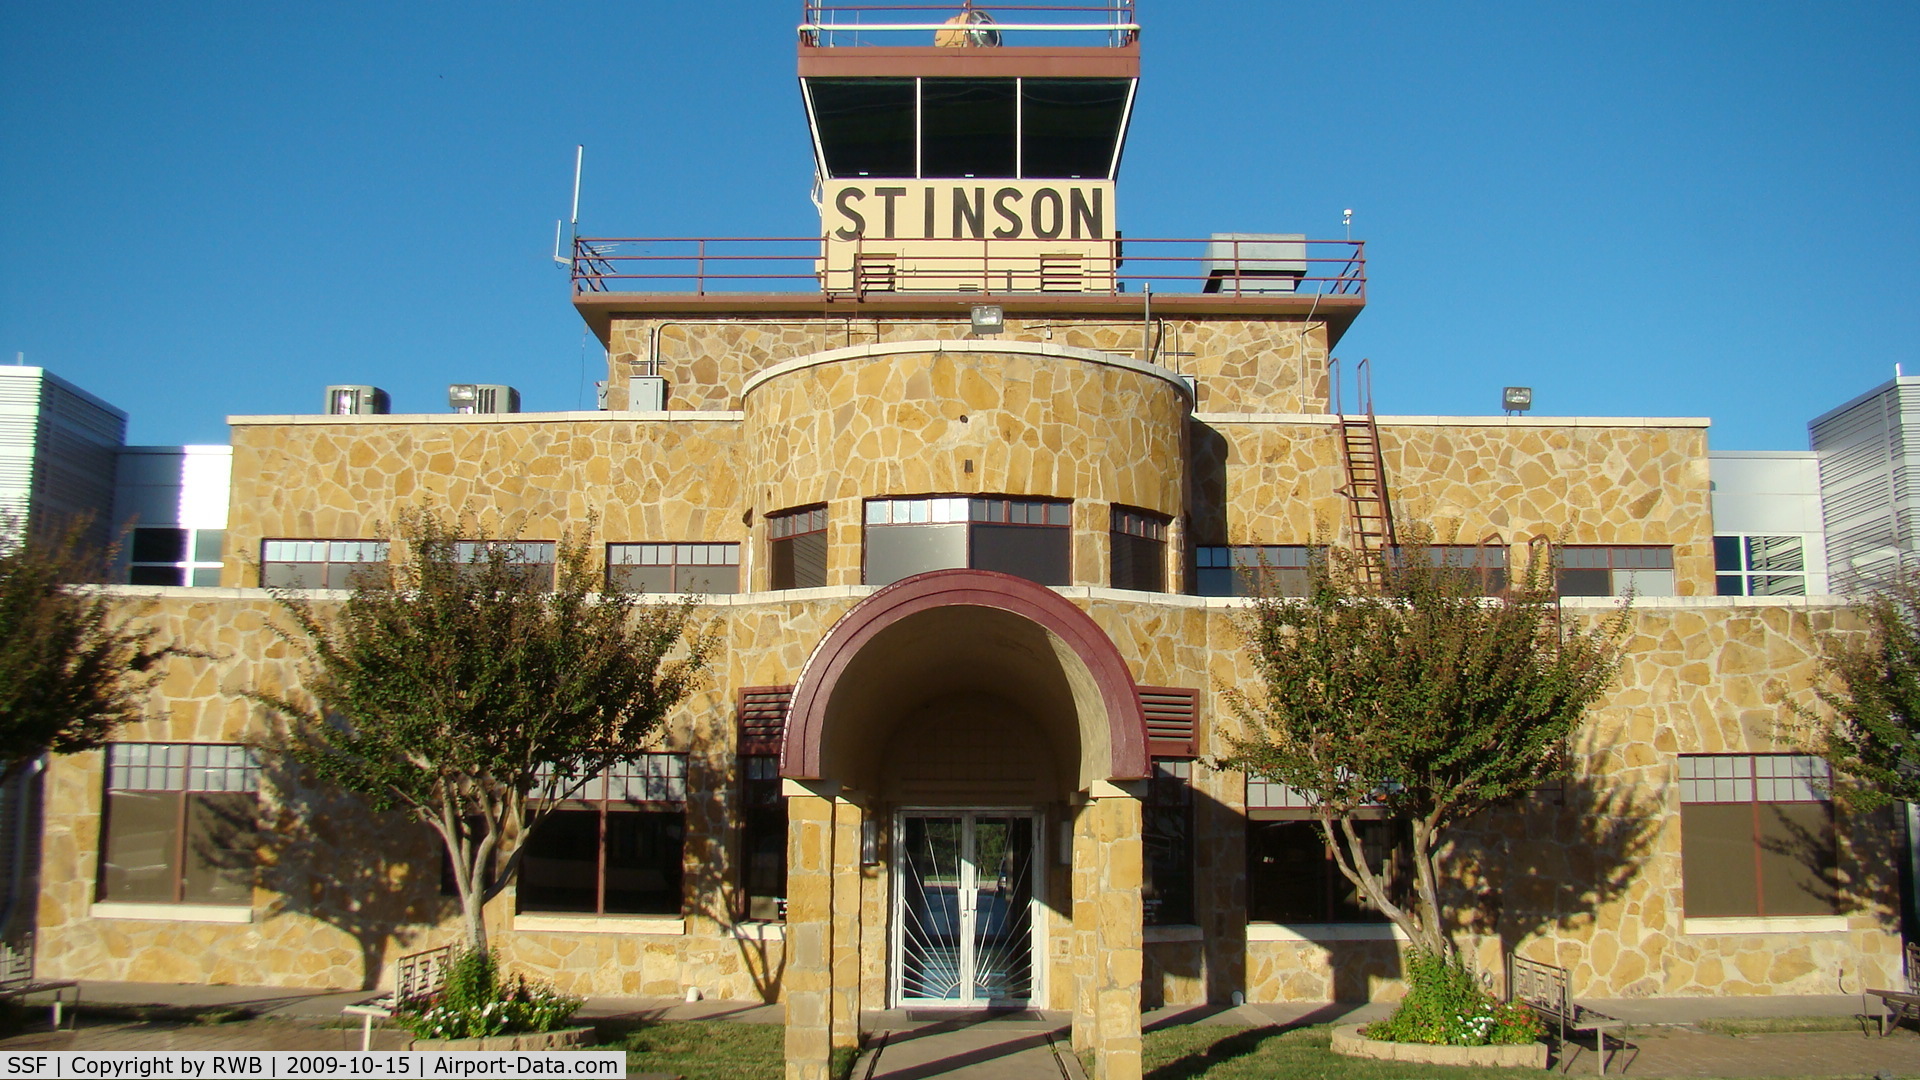 Stinson Municipal Airport (SSF) - Terminal building